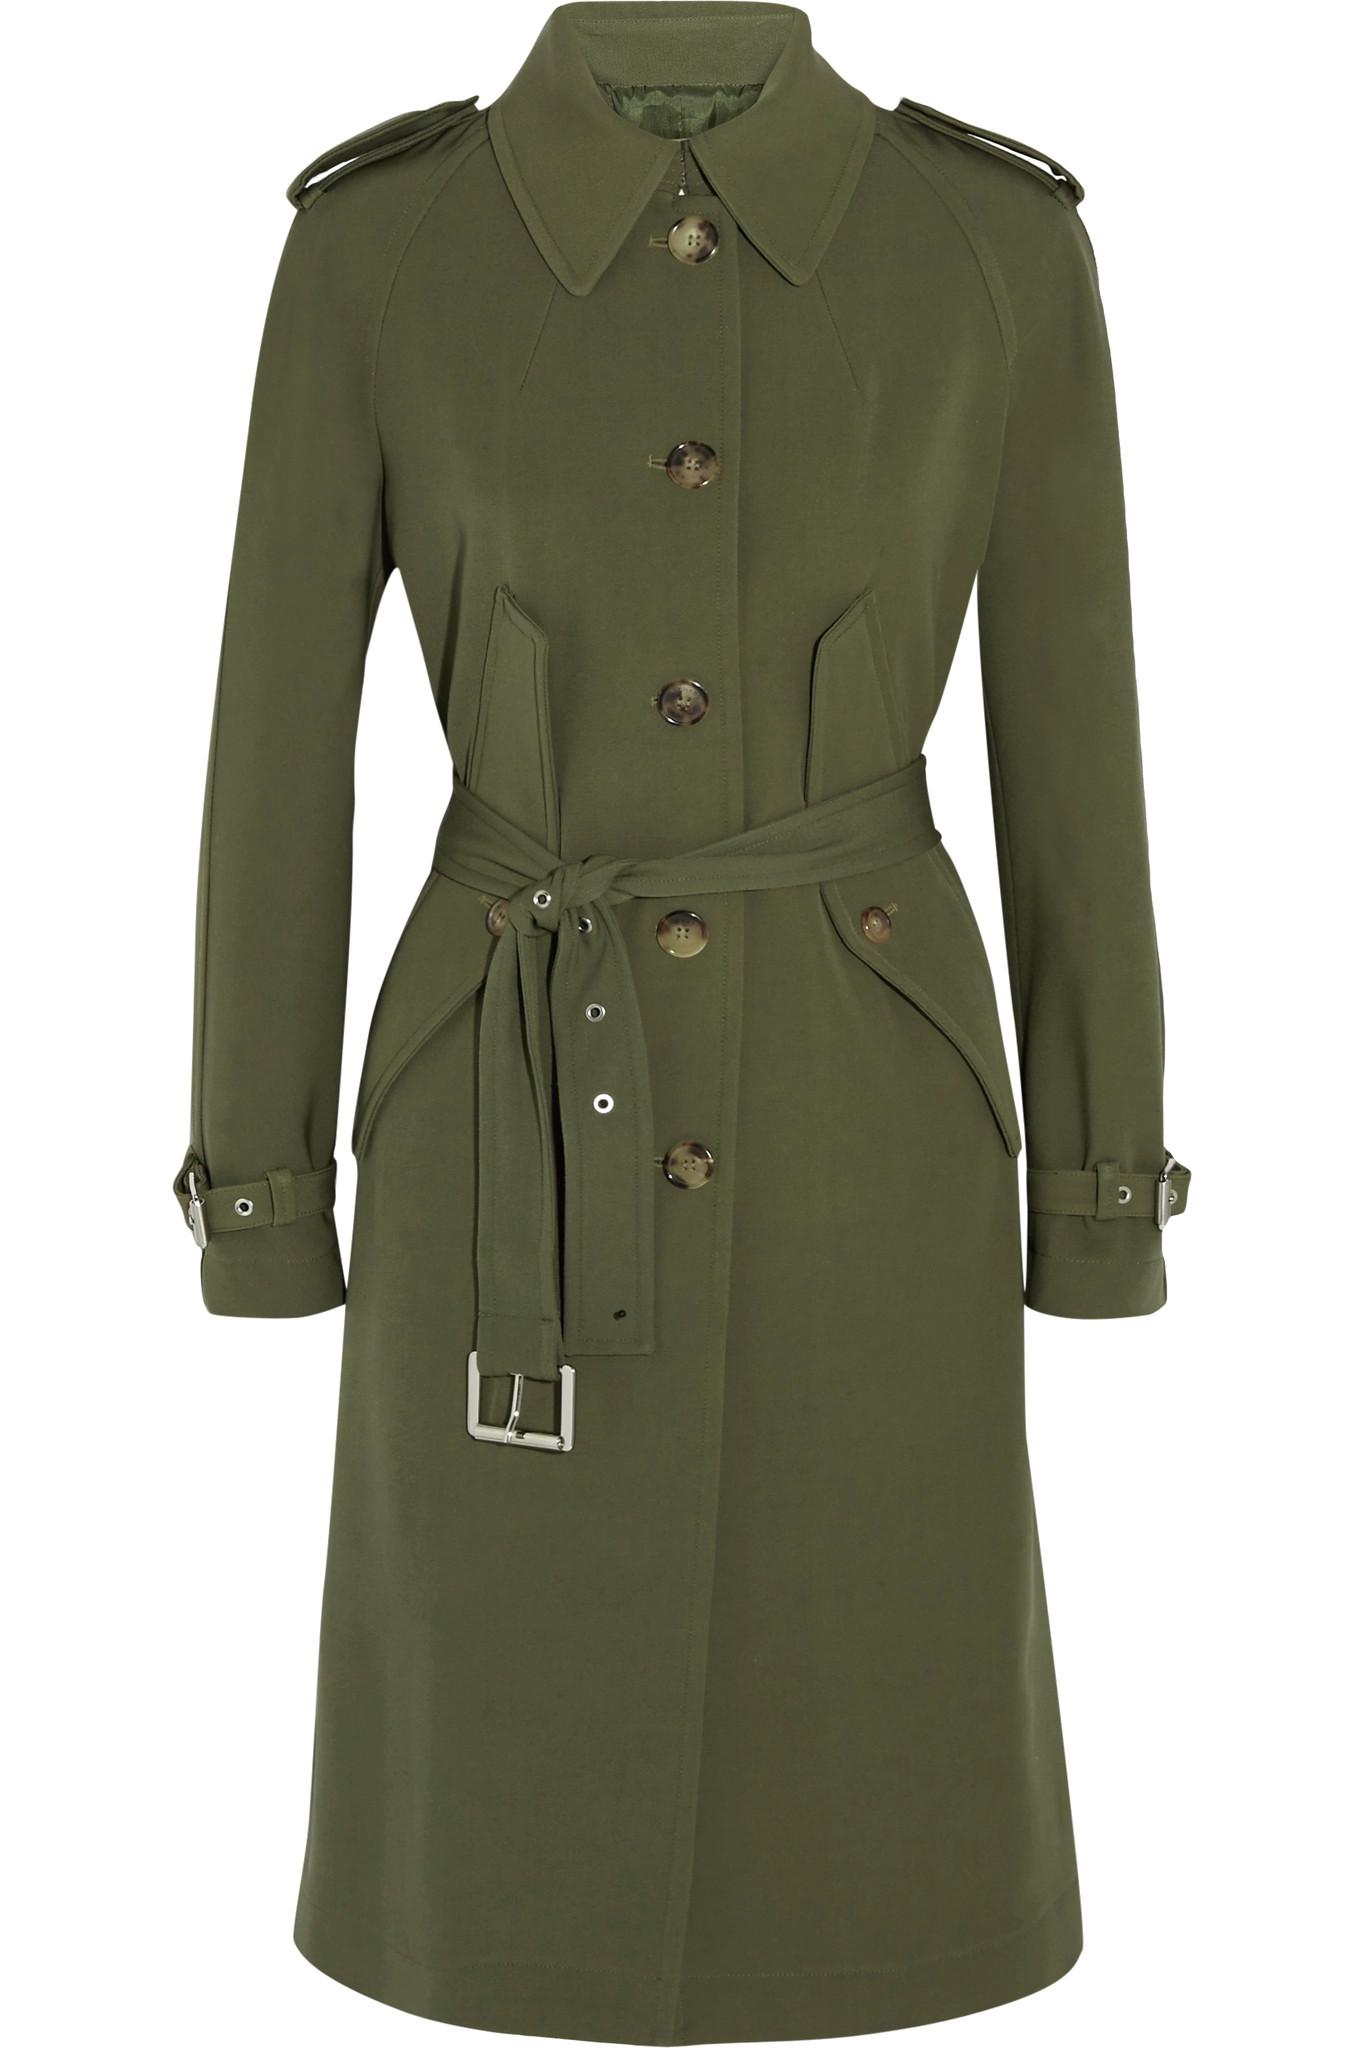 Michael Kors Wool-gabardine Trench Coat in Army Green (Green) - Lyst